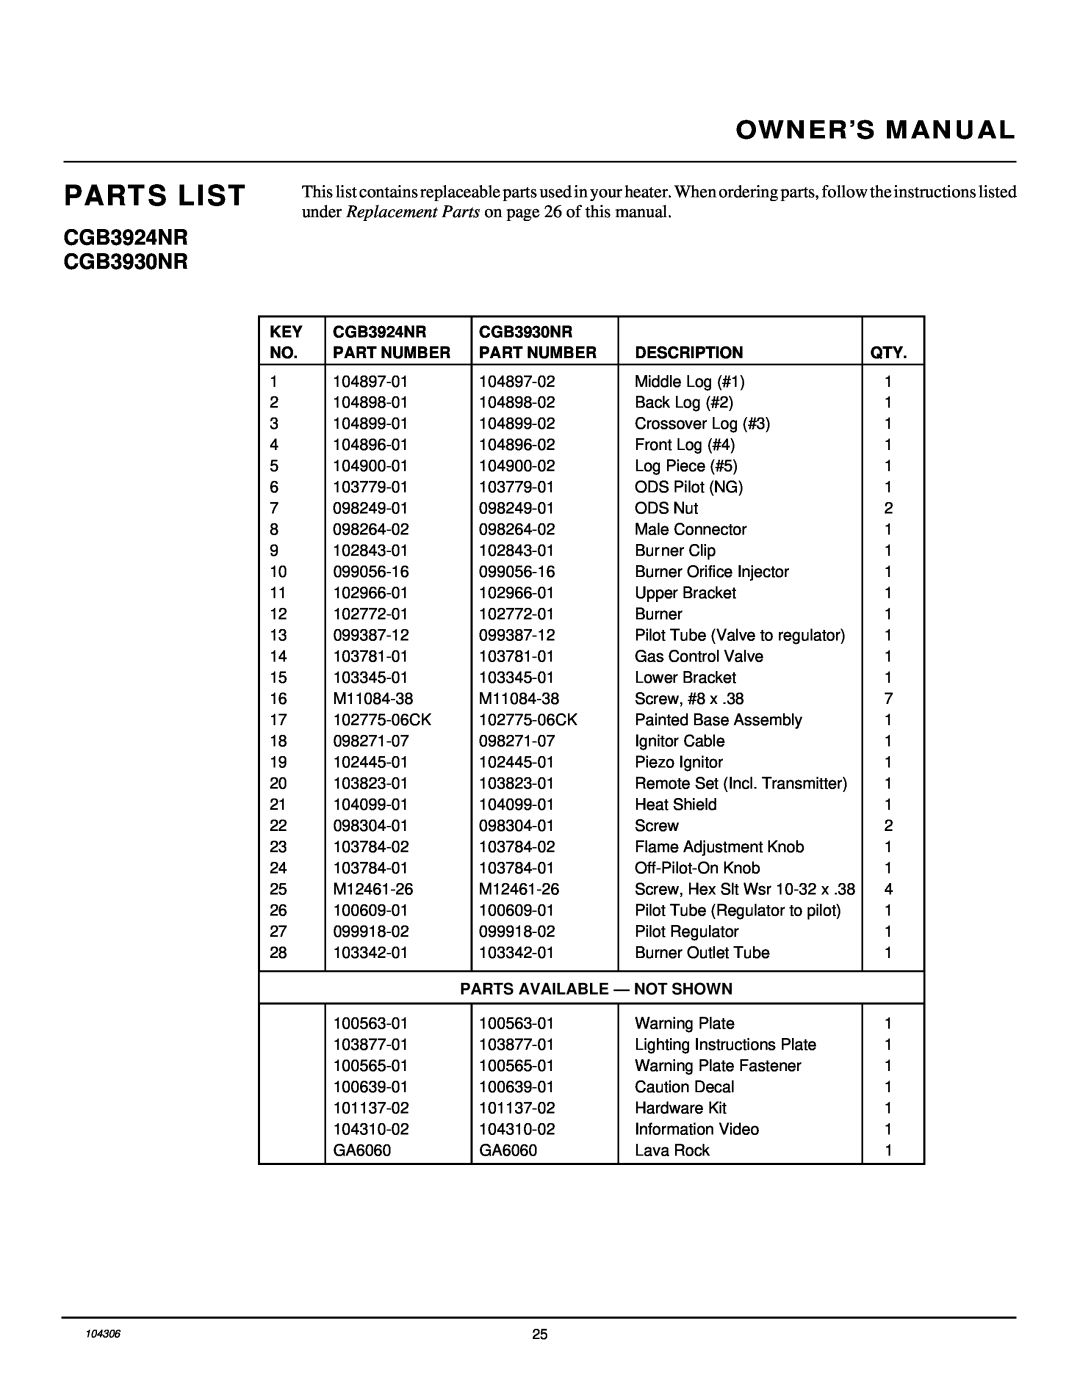 Desa installation manual Parts List, CGB3924NR CGB3930NR, Part Number, Description, Parts Available - Not Shown 